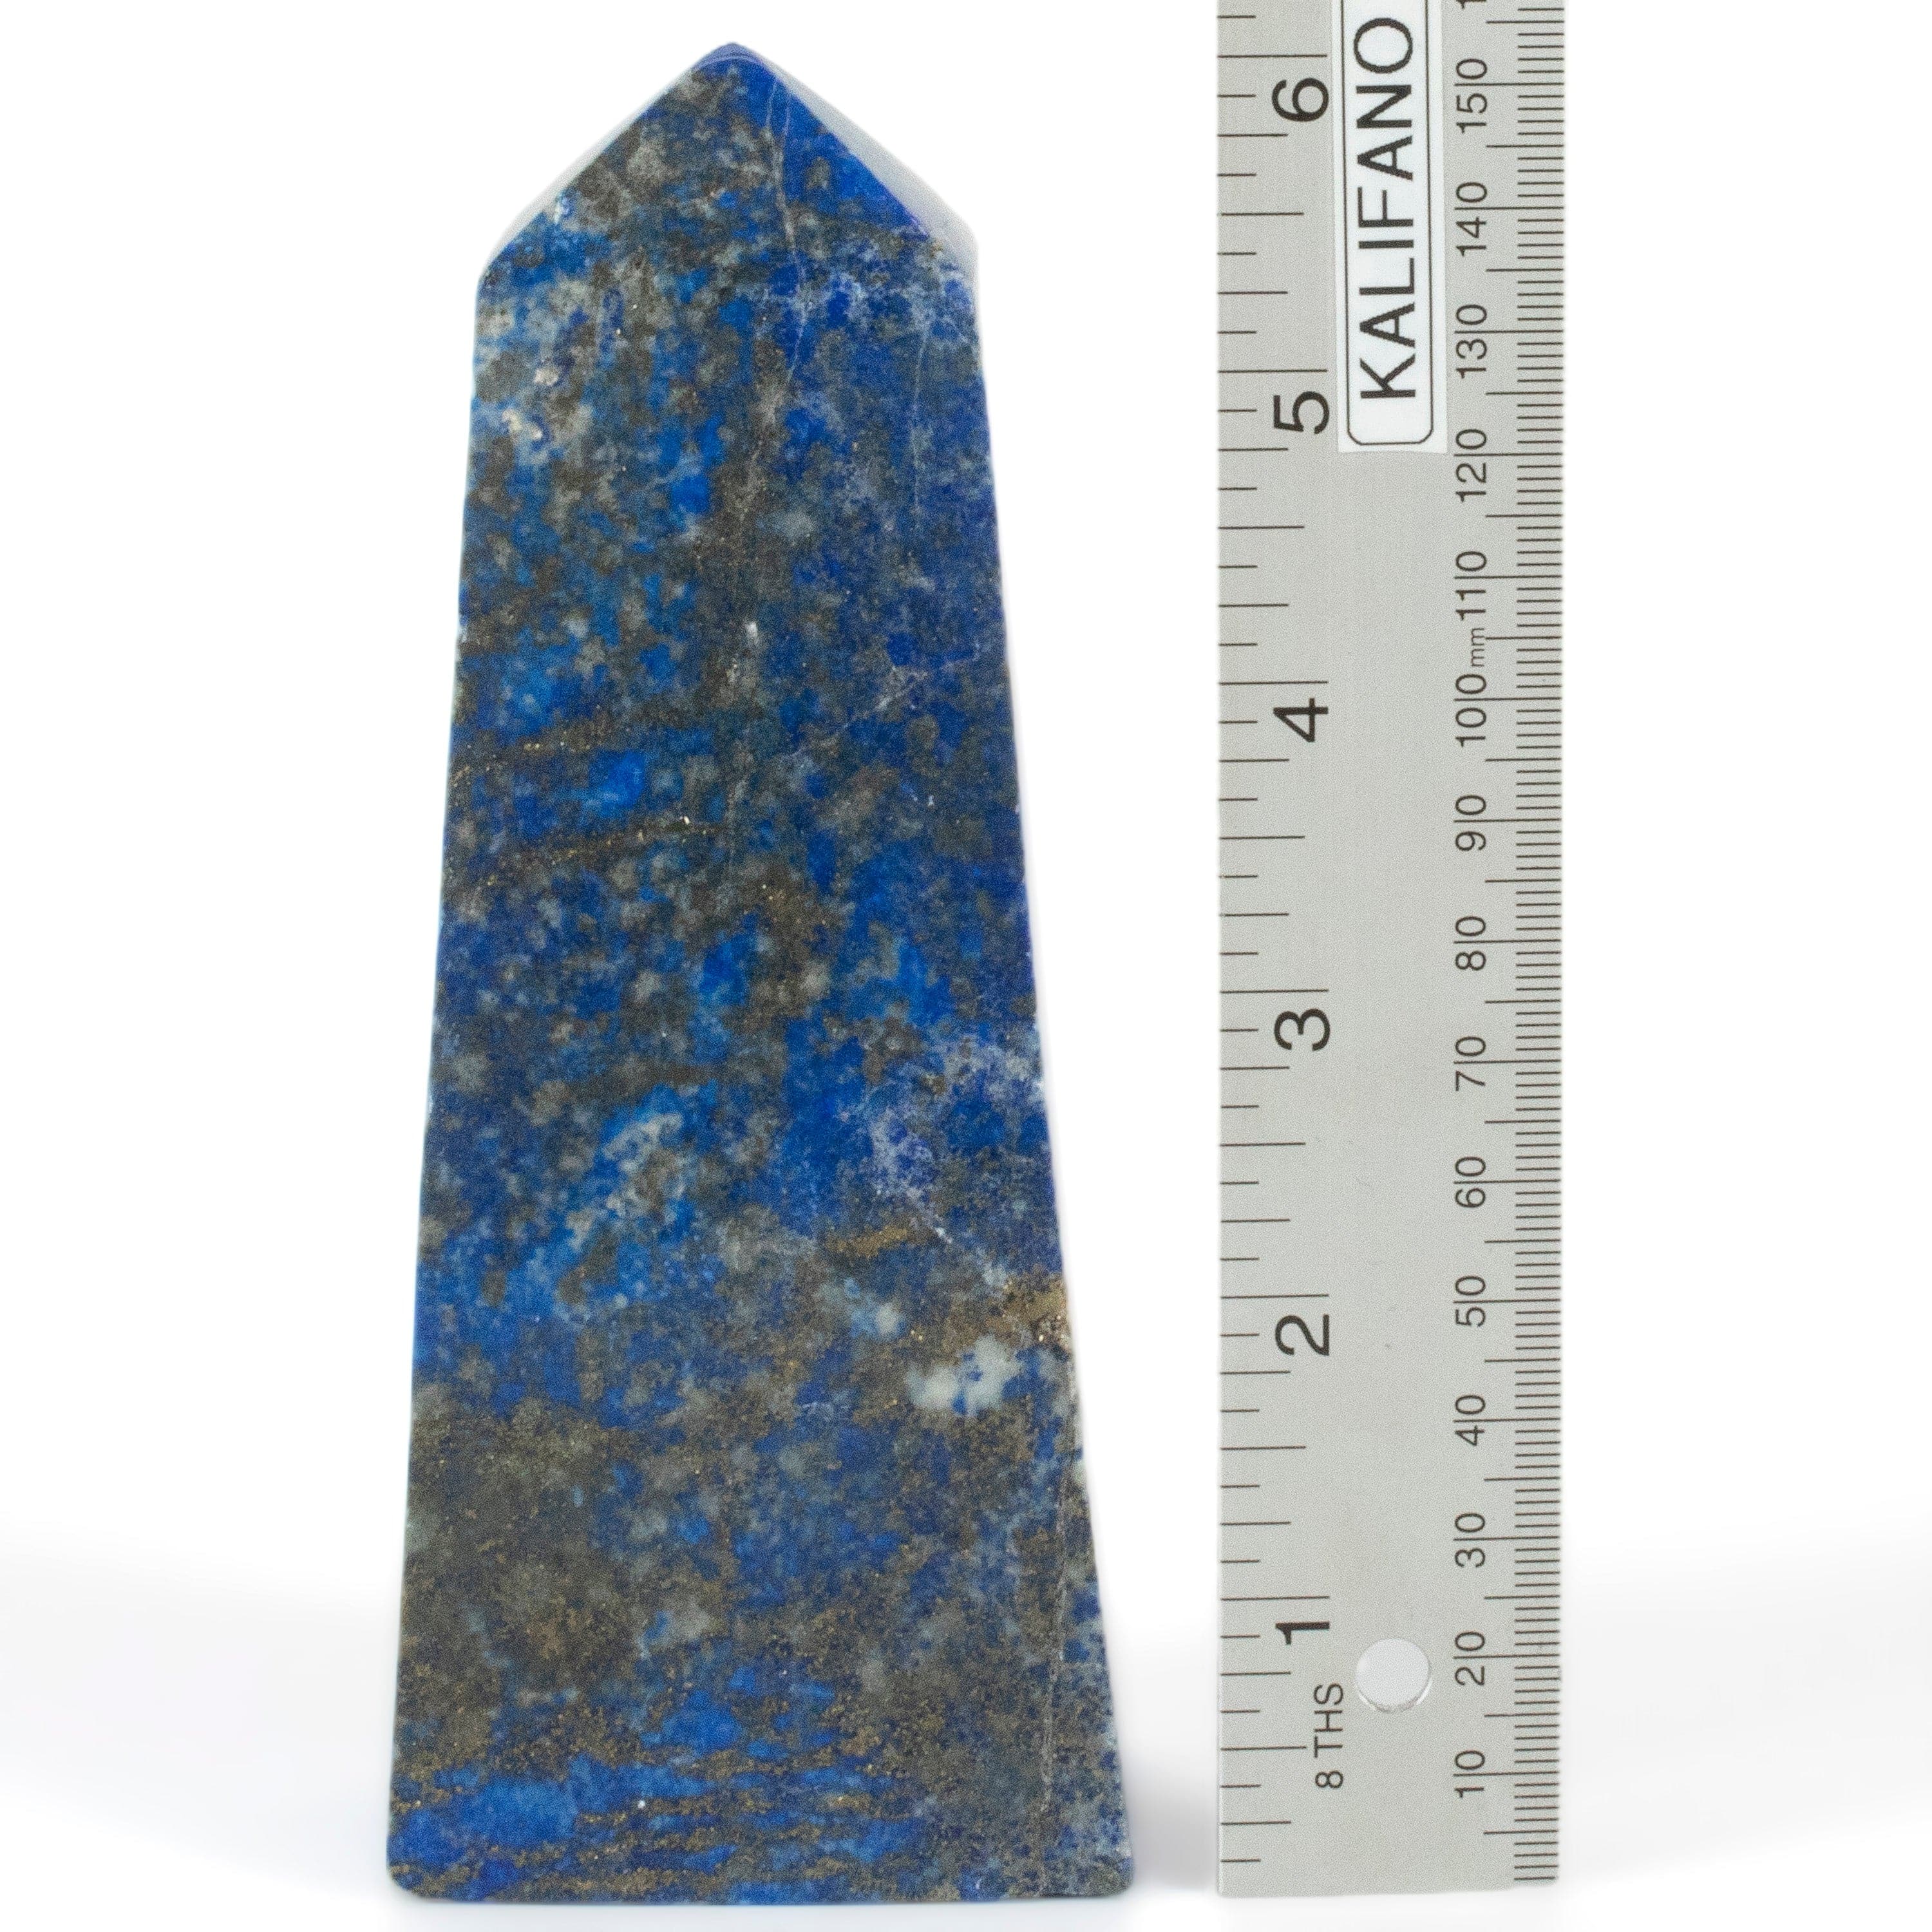 Kalifano Lapis Lapis Lazuli Polished Obelisk from Afghanistan - 6" / 827 grams LPOB1650.001